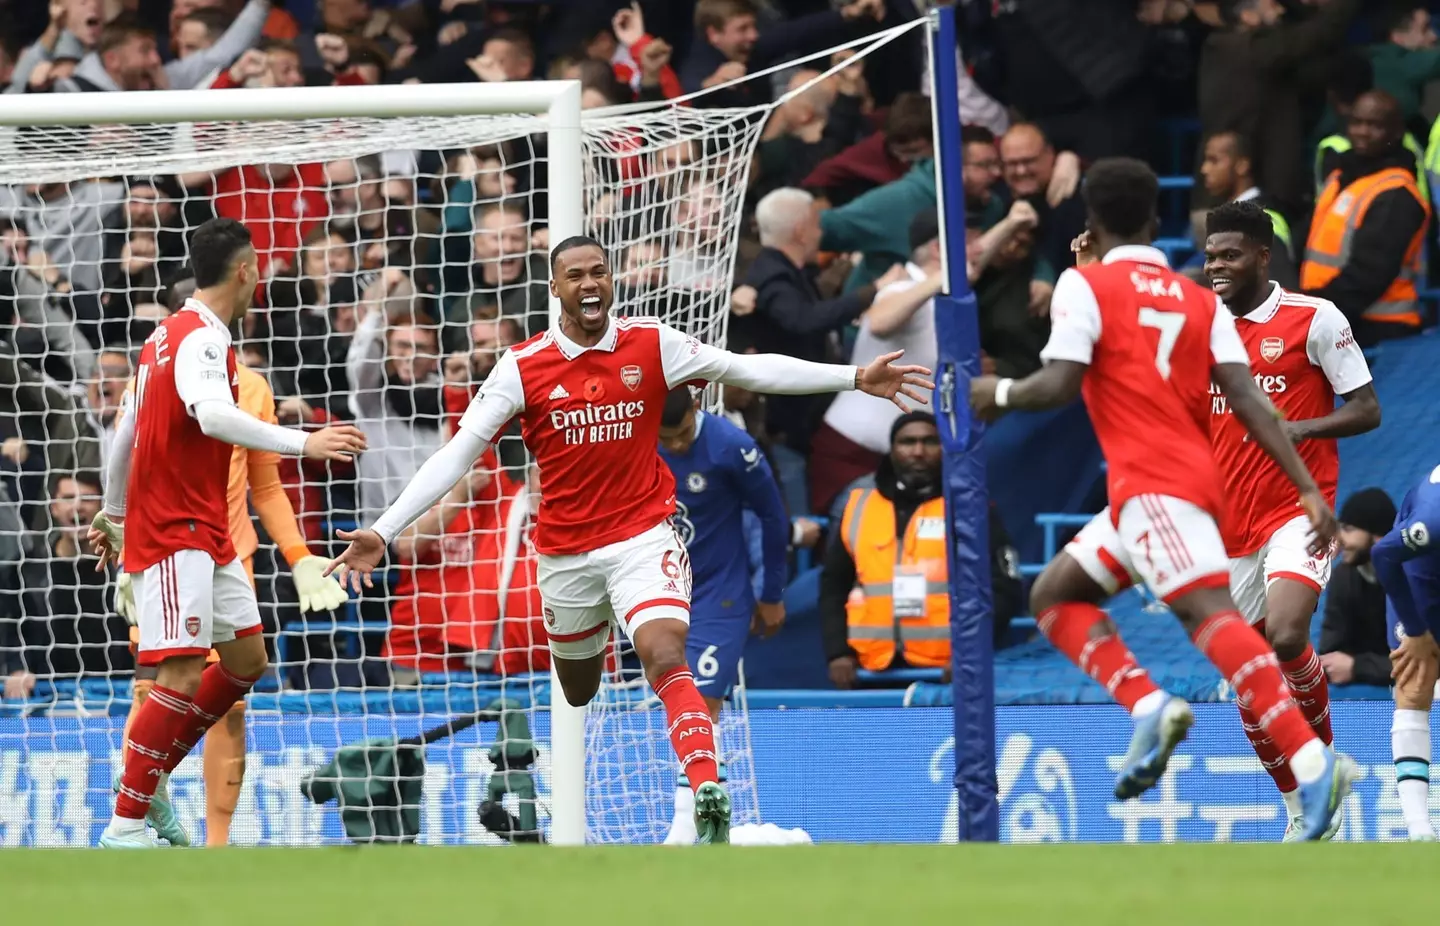 Gabriel celebrates Arsenal's goal. (Image